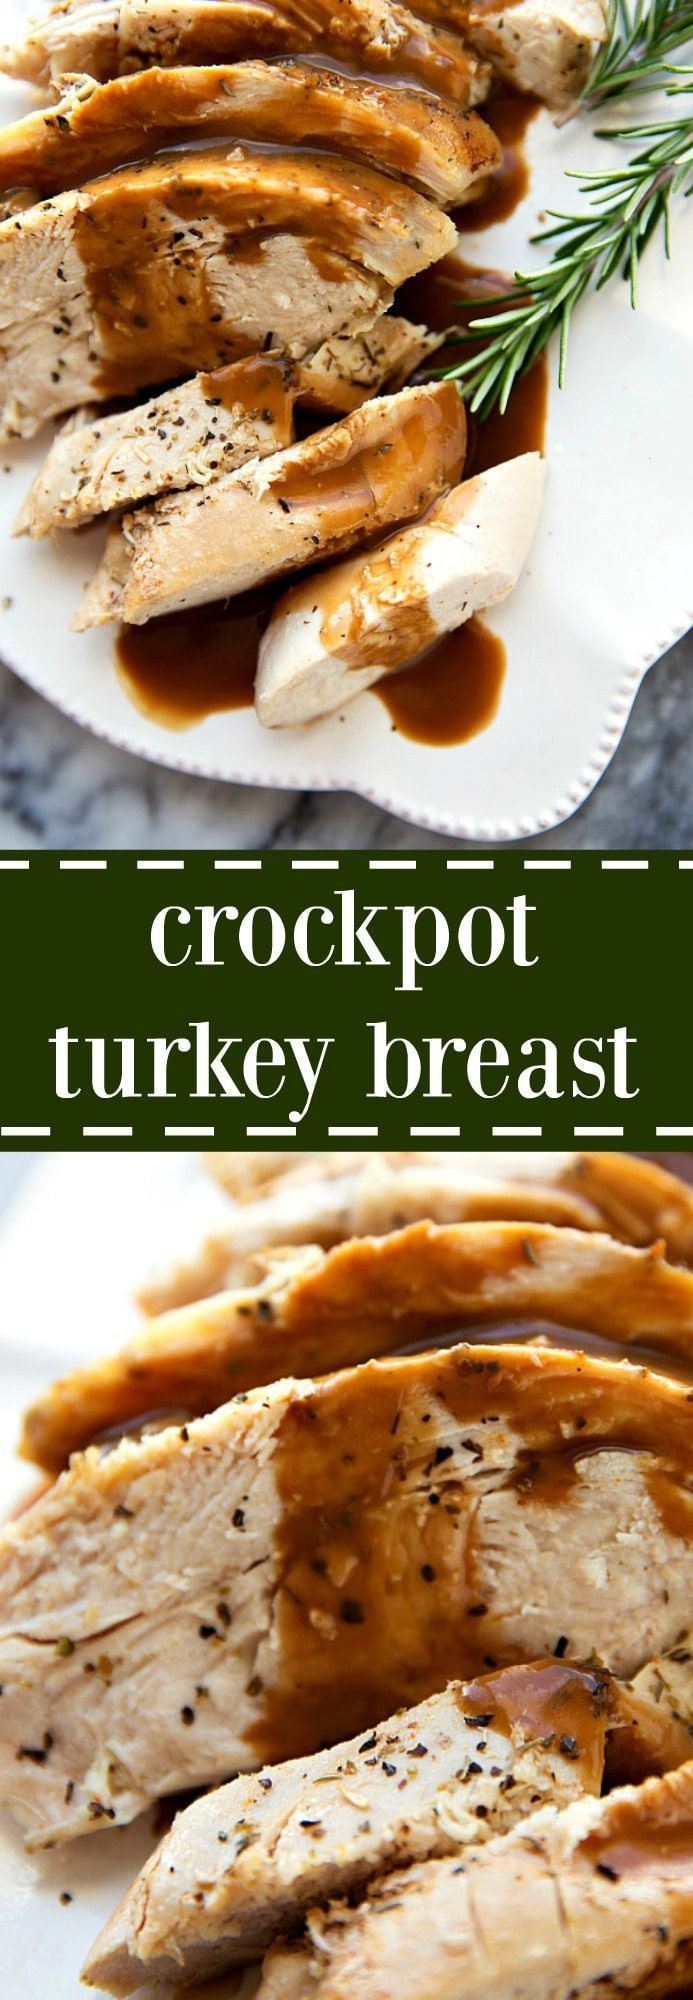 Crockpot Thanksgiving Turkey
 Crockpot Turkey Breast